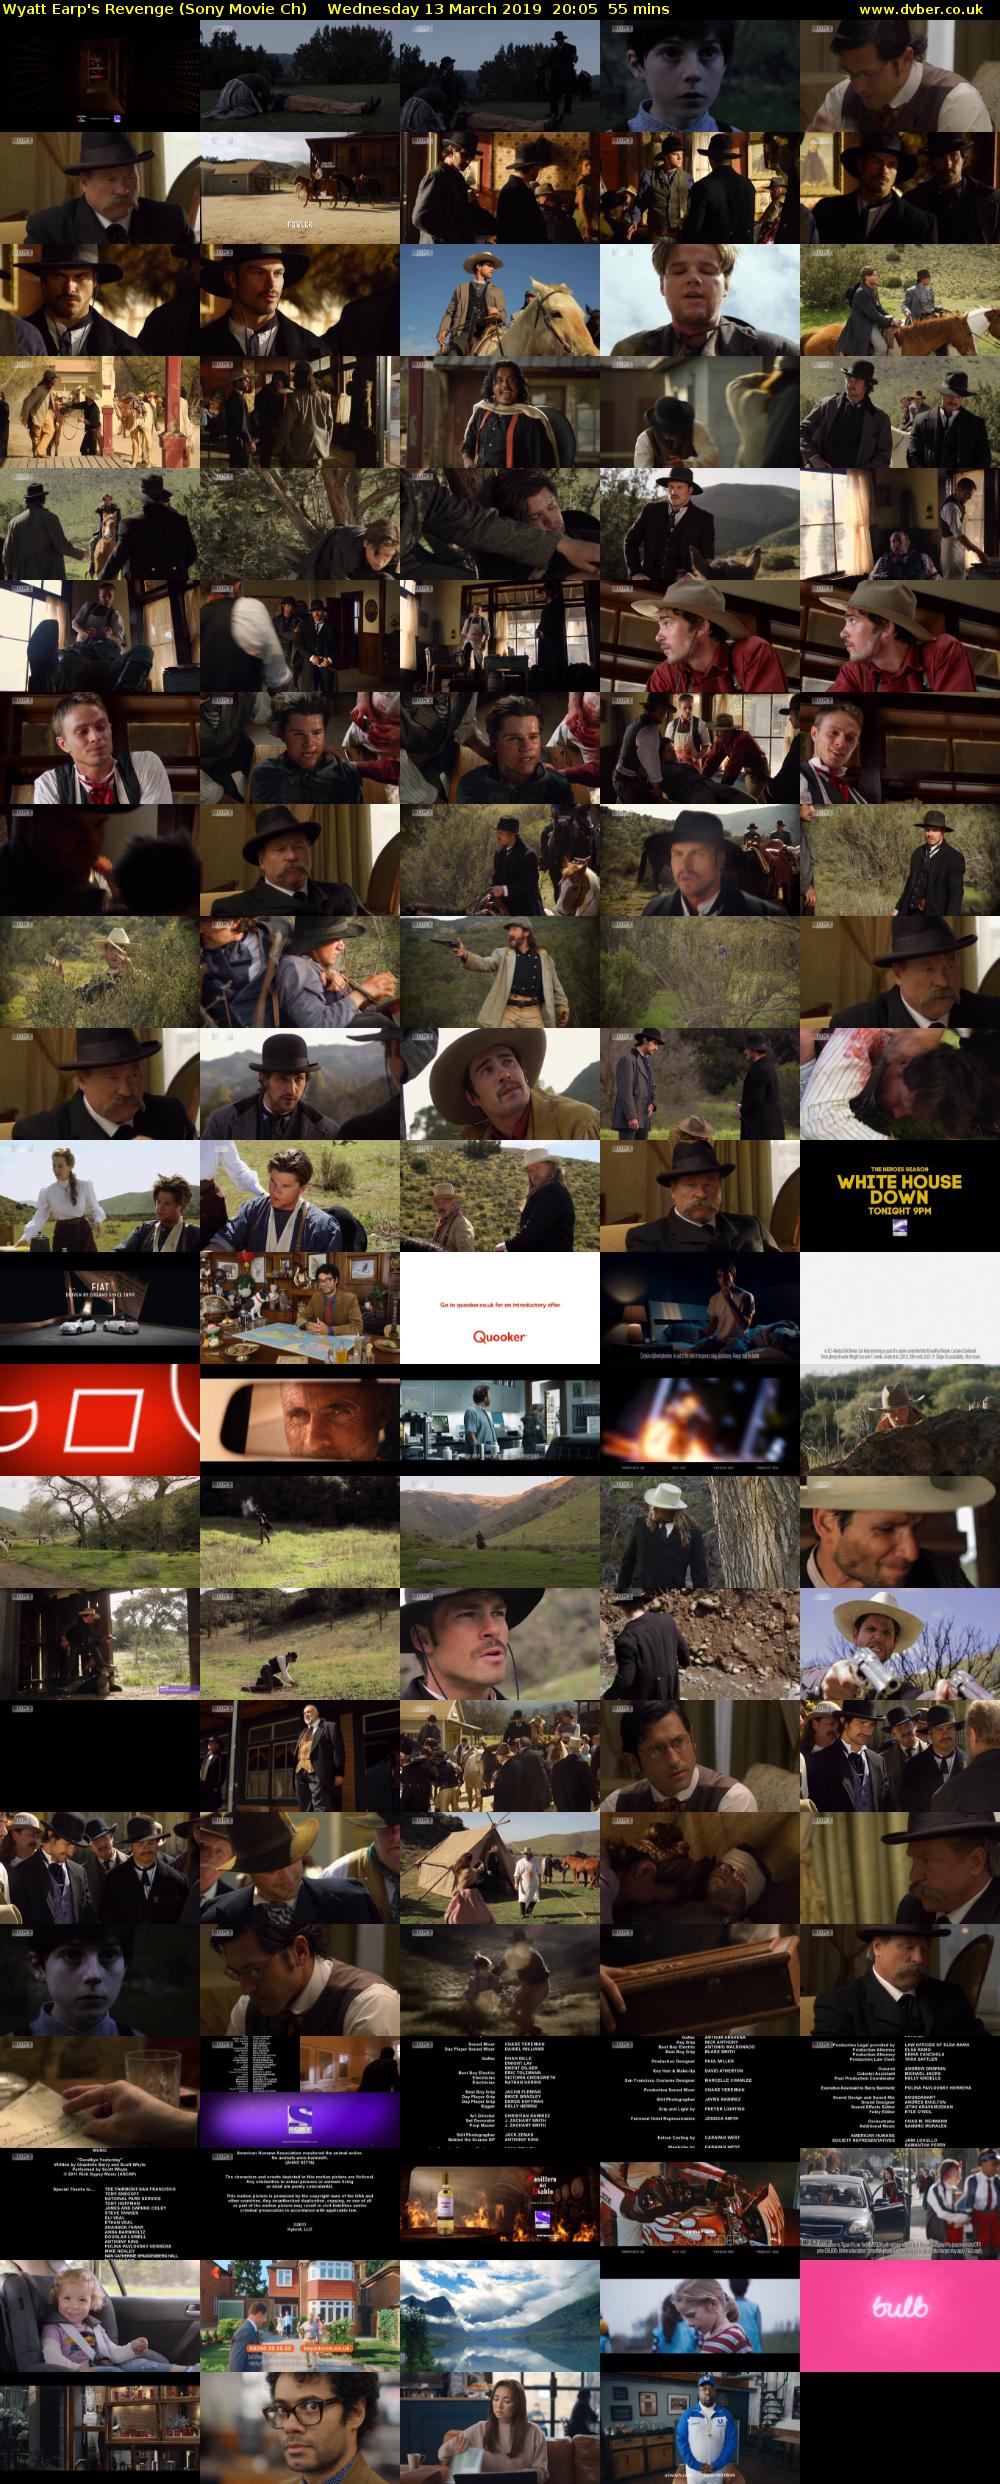 Wyatt Earp's Revenge (Sony Movie Ch) Wednesday 13 March 2019 20:05 - 21:00